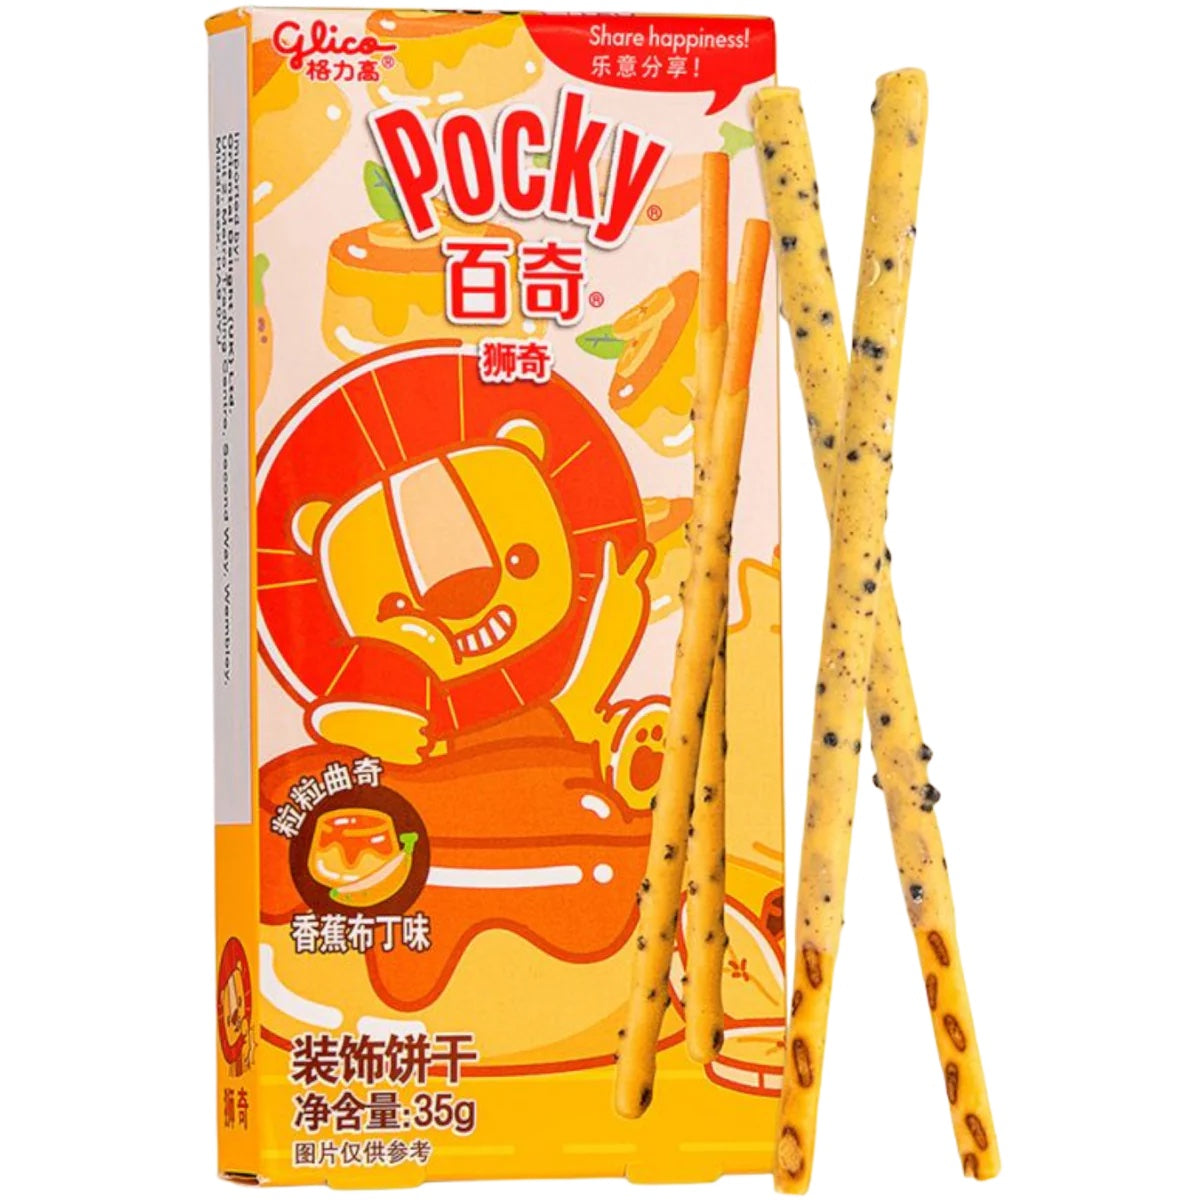 Pocky - Lion - Banana Pudding Flavour - 35g (China)